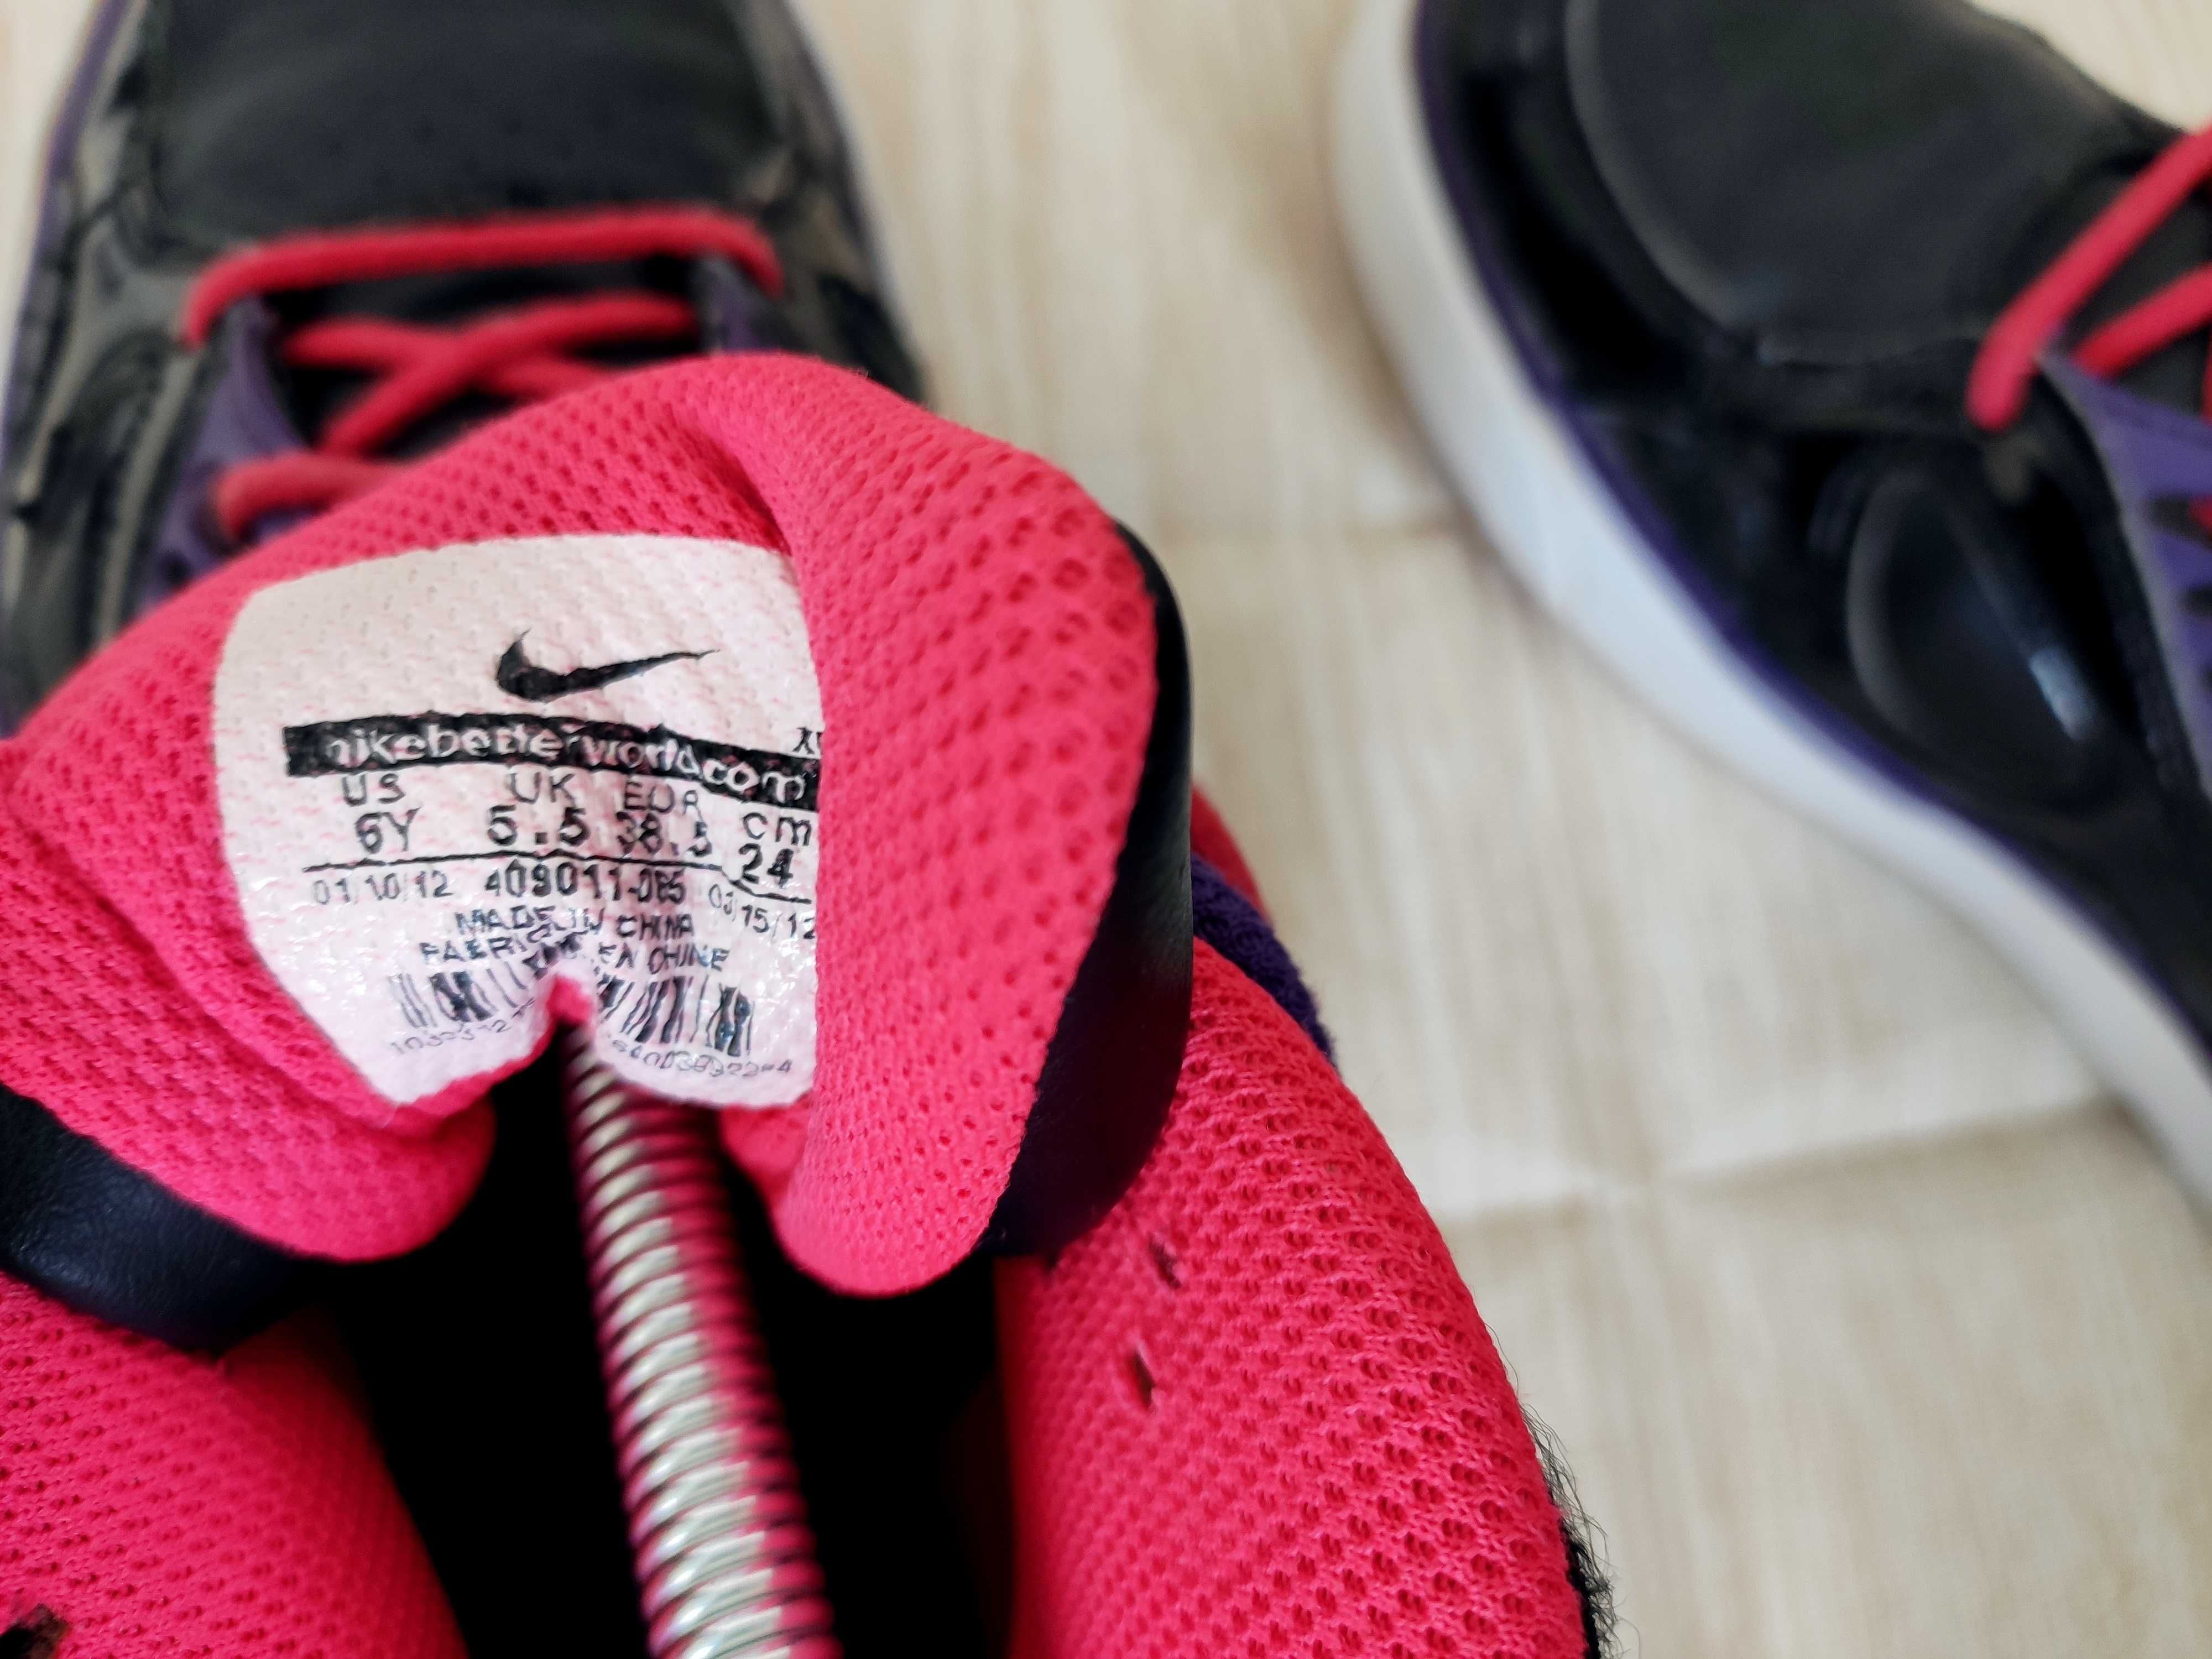 Nike Dunk, Air Force One, rozmiar 38.5, stan bardzo dobry